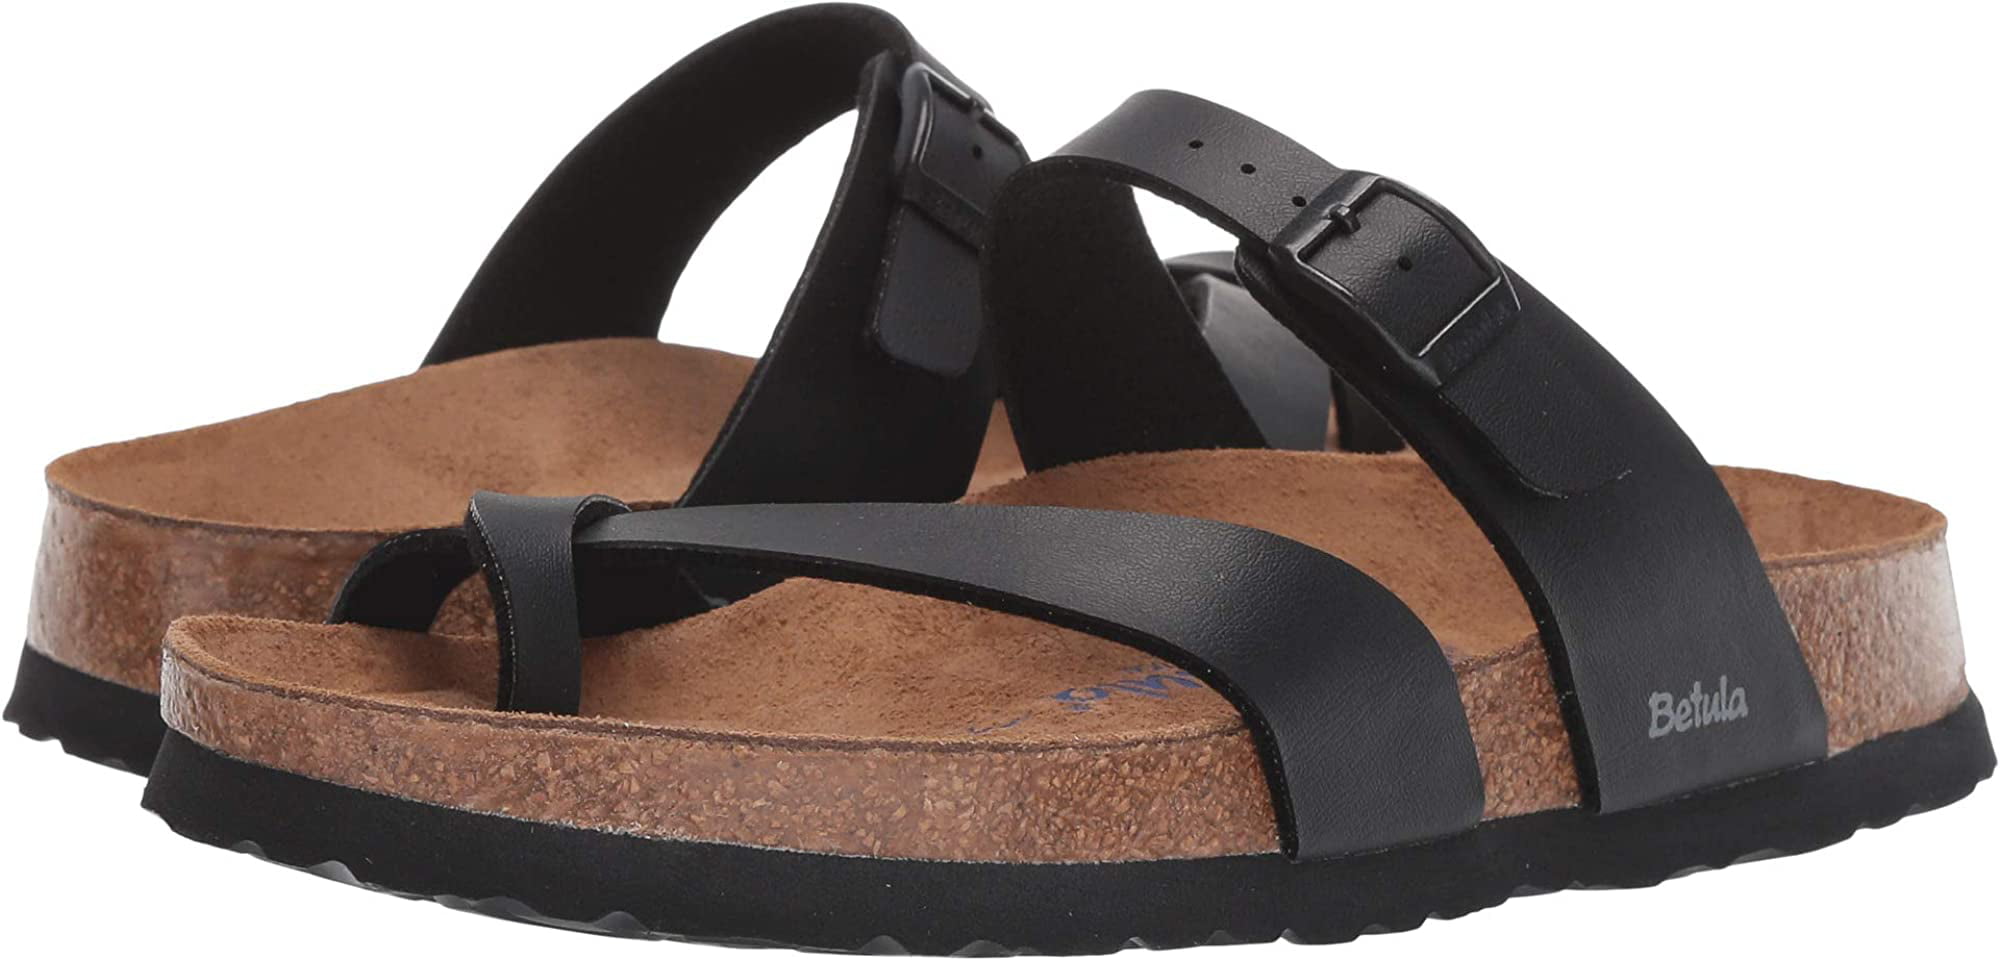 New Betula sandals | Women's - Shoes | Cambridge | Kijiji